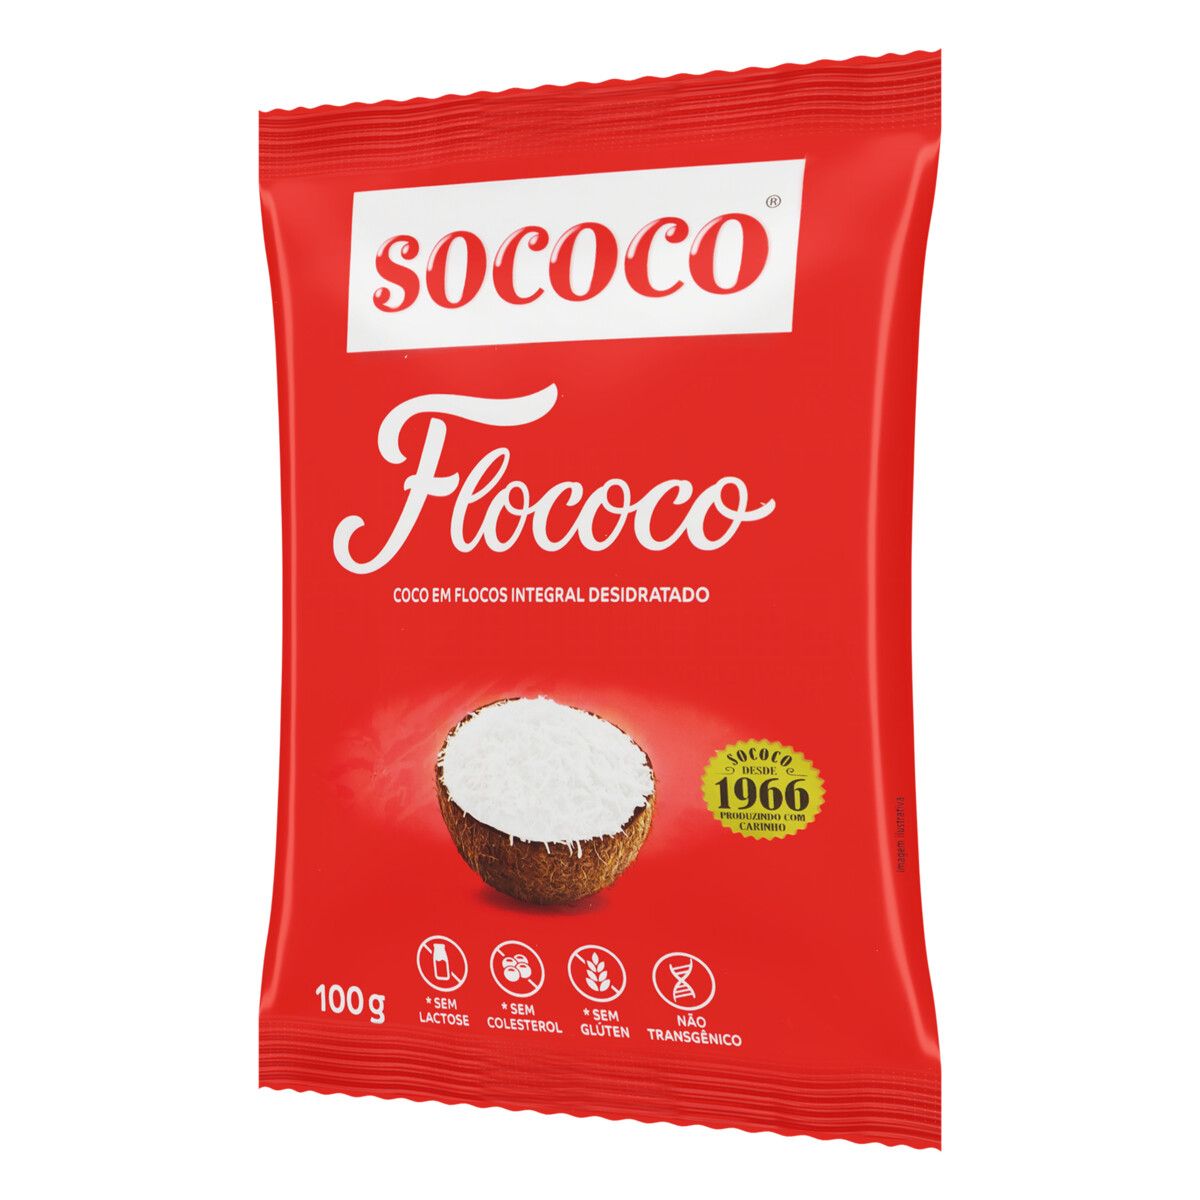 Coco Ralado Sococo Desidratado em Flocos Flococo 100g image number 2